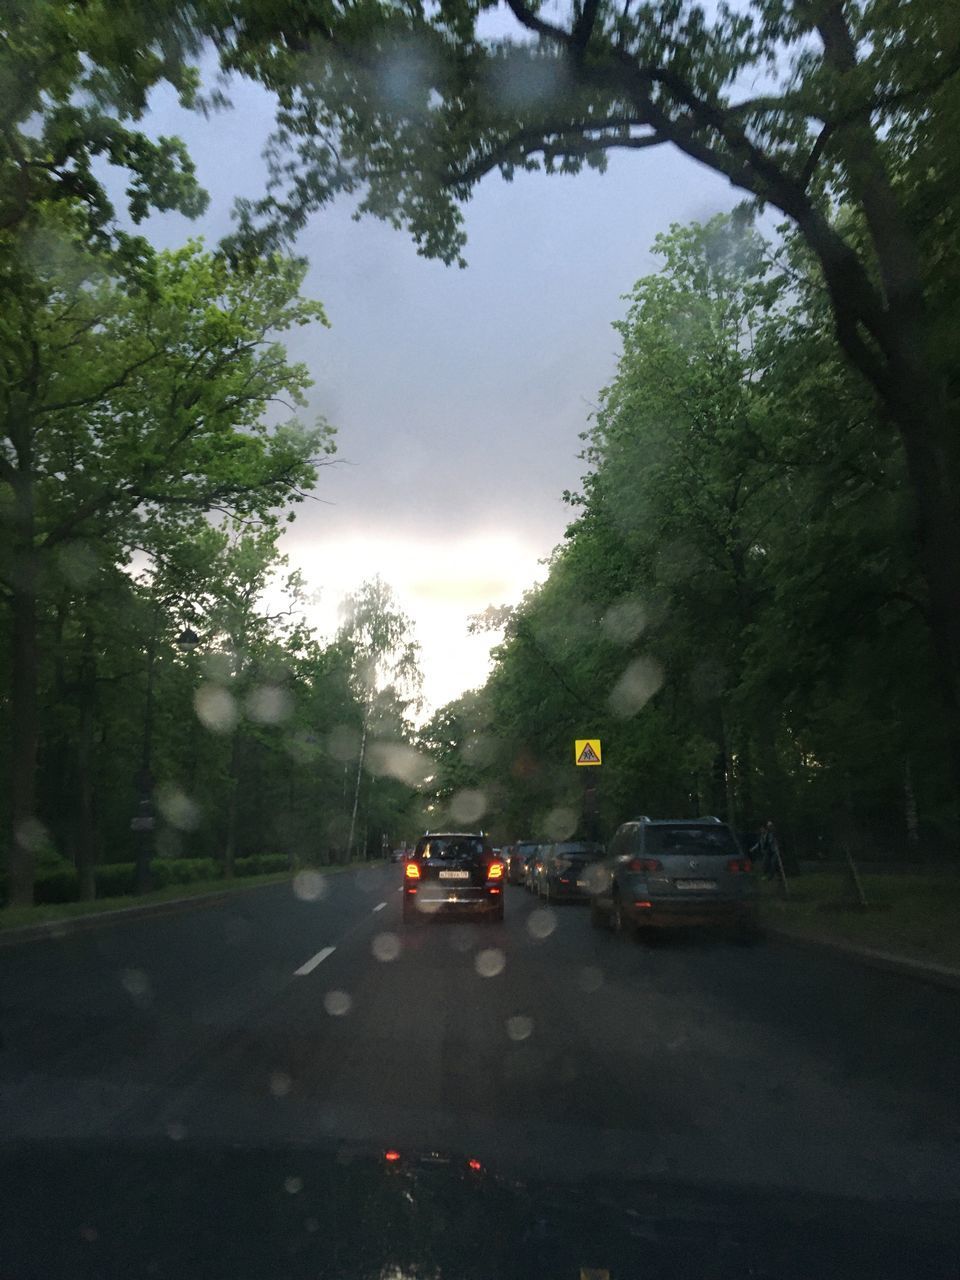 CARS ON ROAD IN RAIN